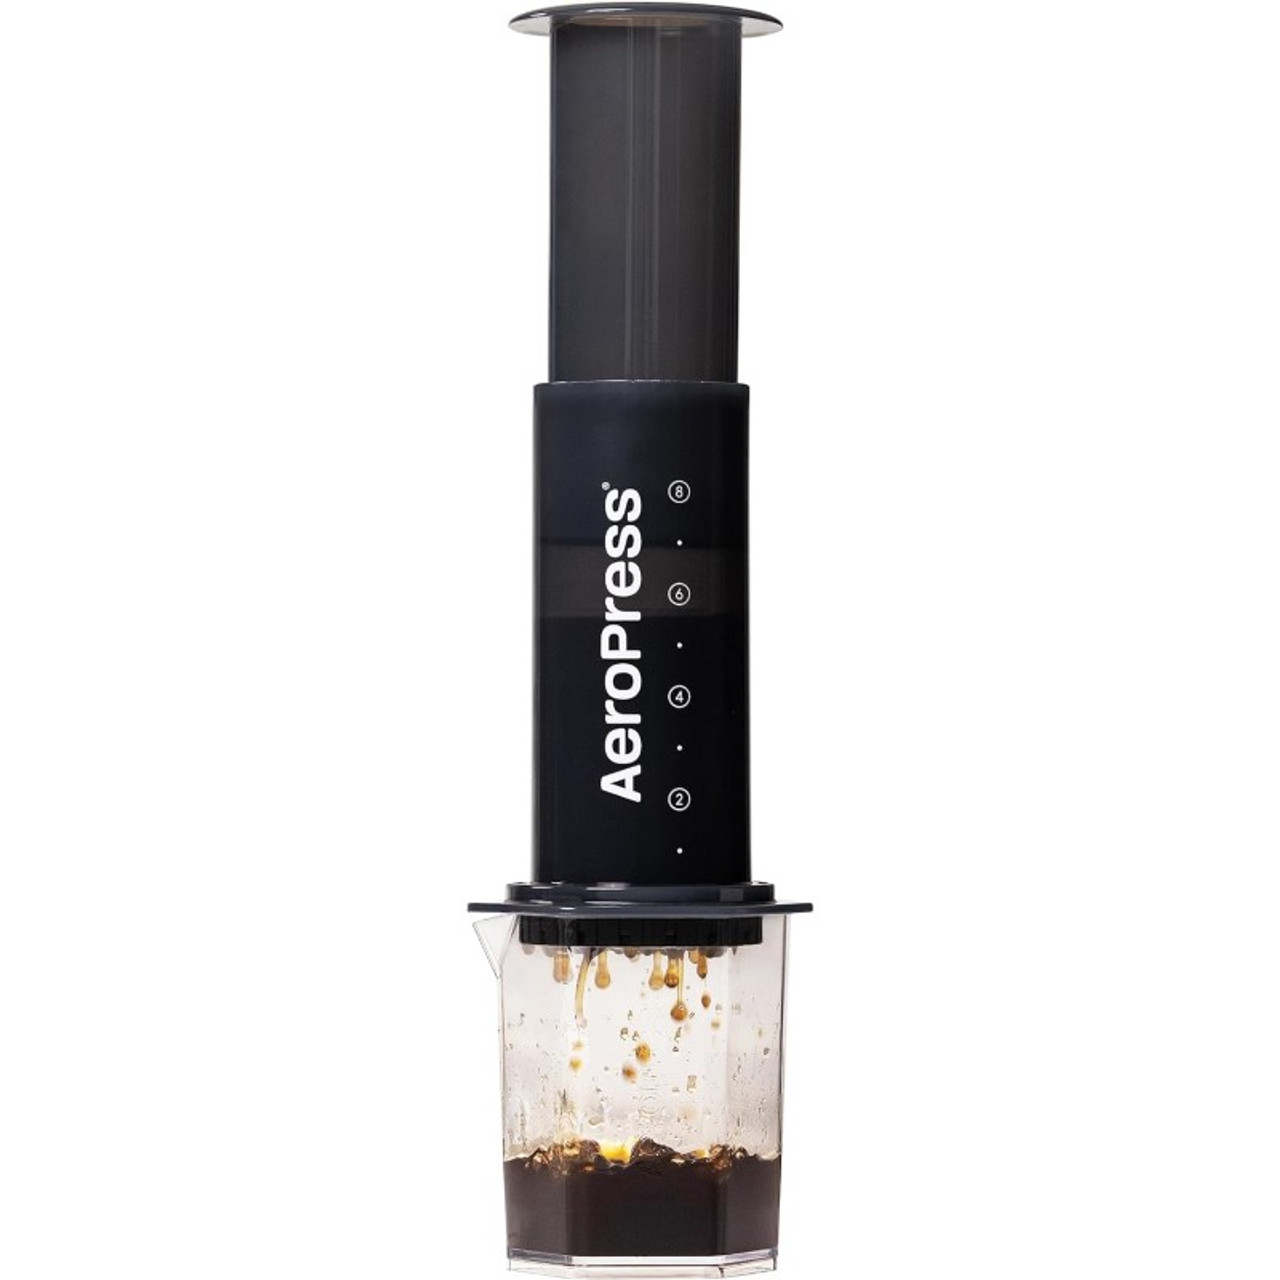 Stovetop Espresso Coffee Maker 9 Cup - Prestogeorge Coffee & Tea